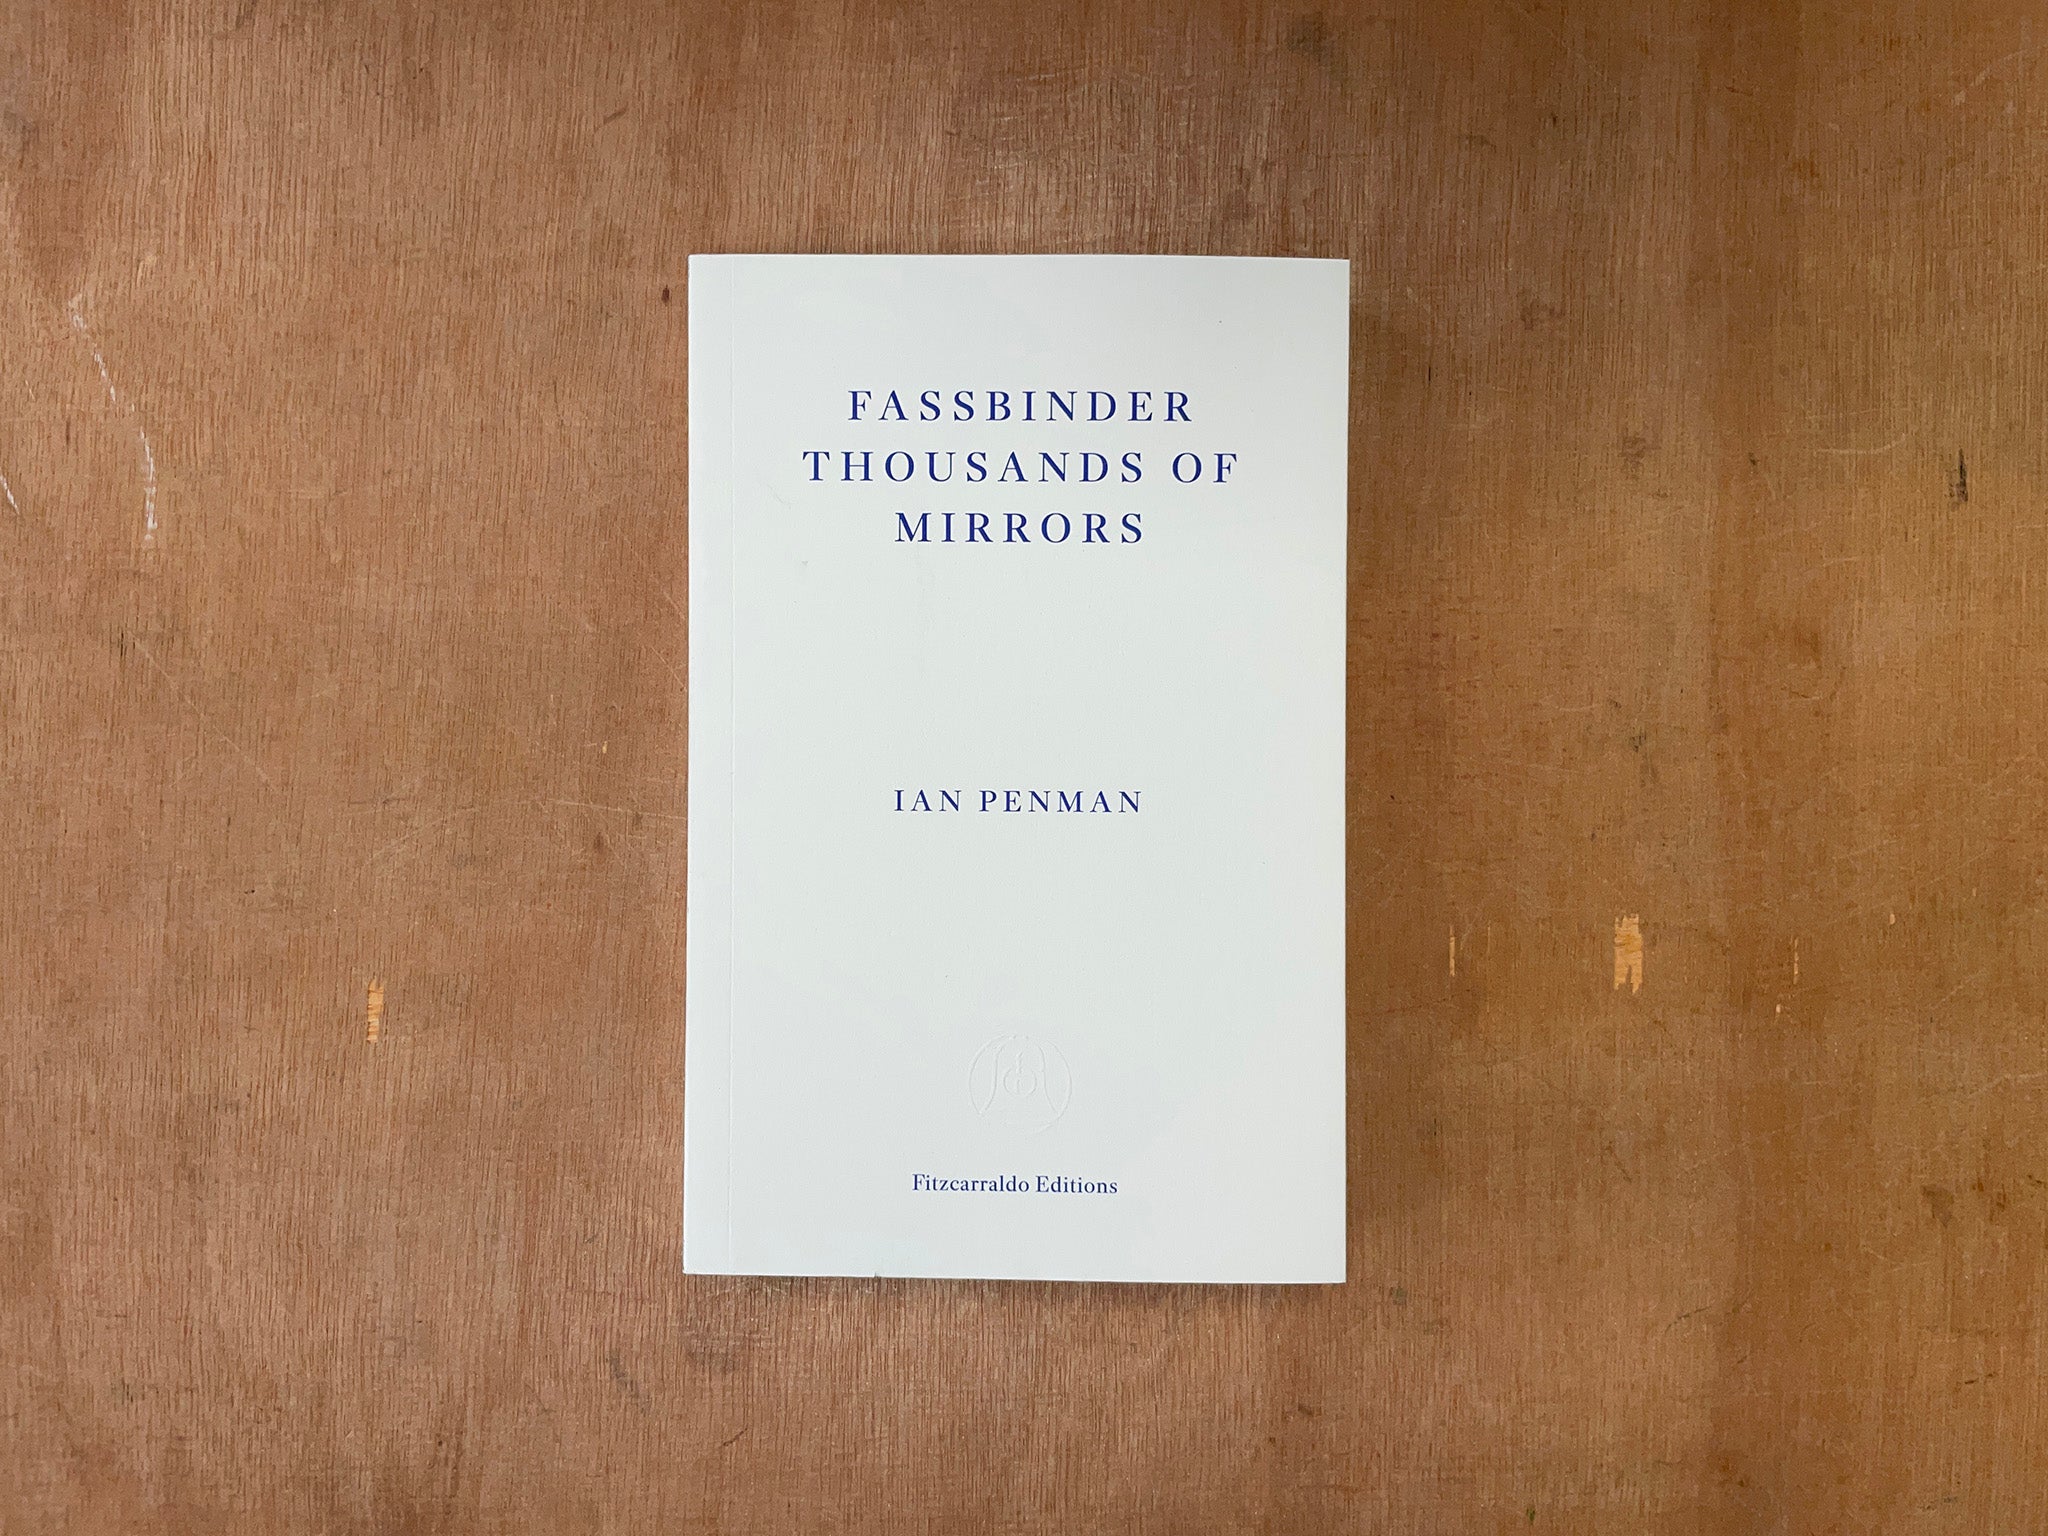 FASSBINDER THOUSANDS OF MIRRORS by Ian Penman